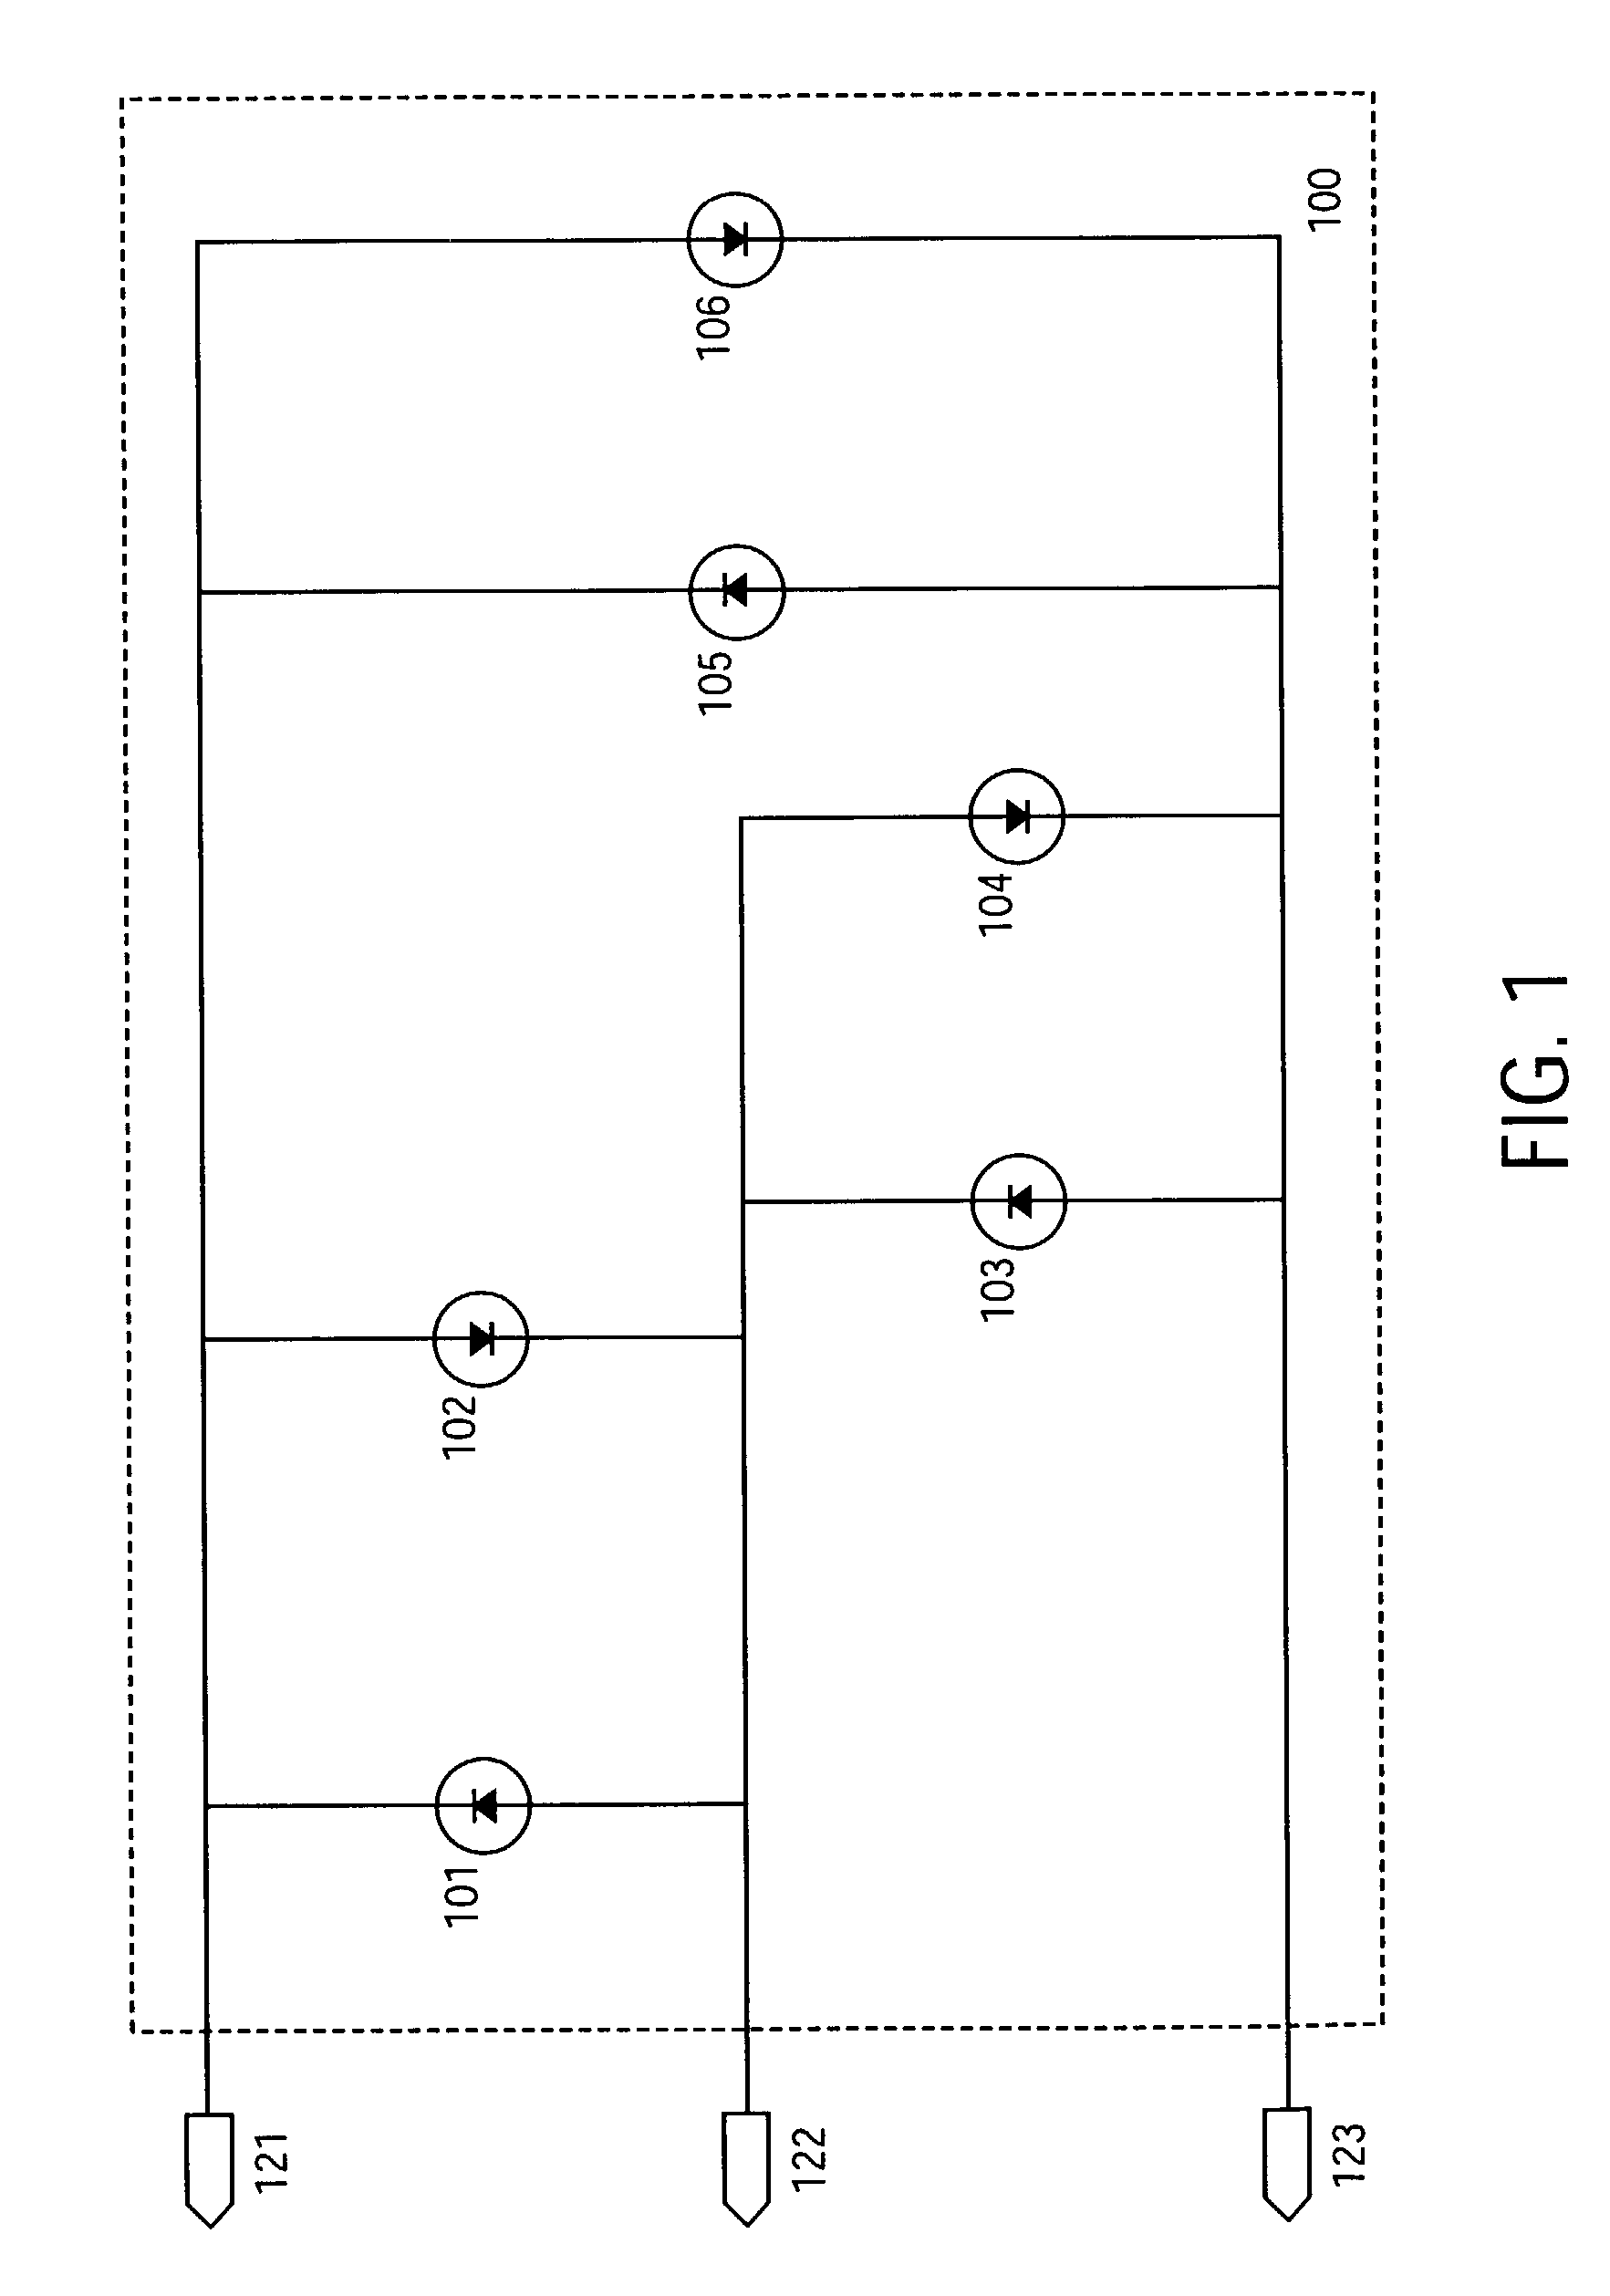 Circuit for sensing on-die temperature at multiple locations